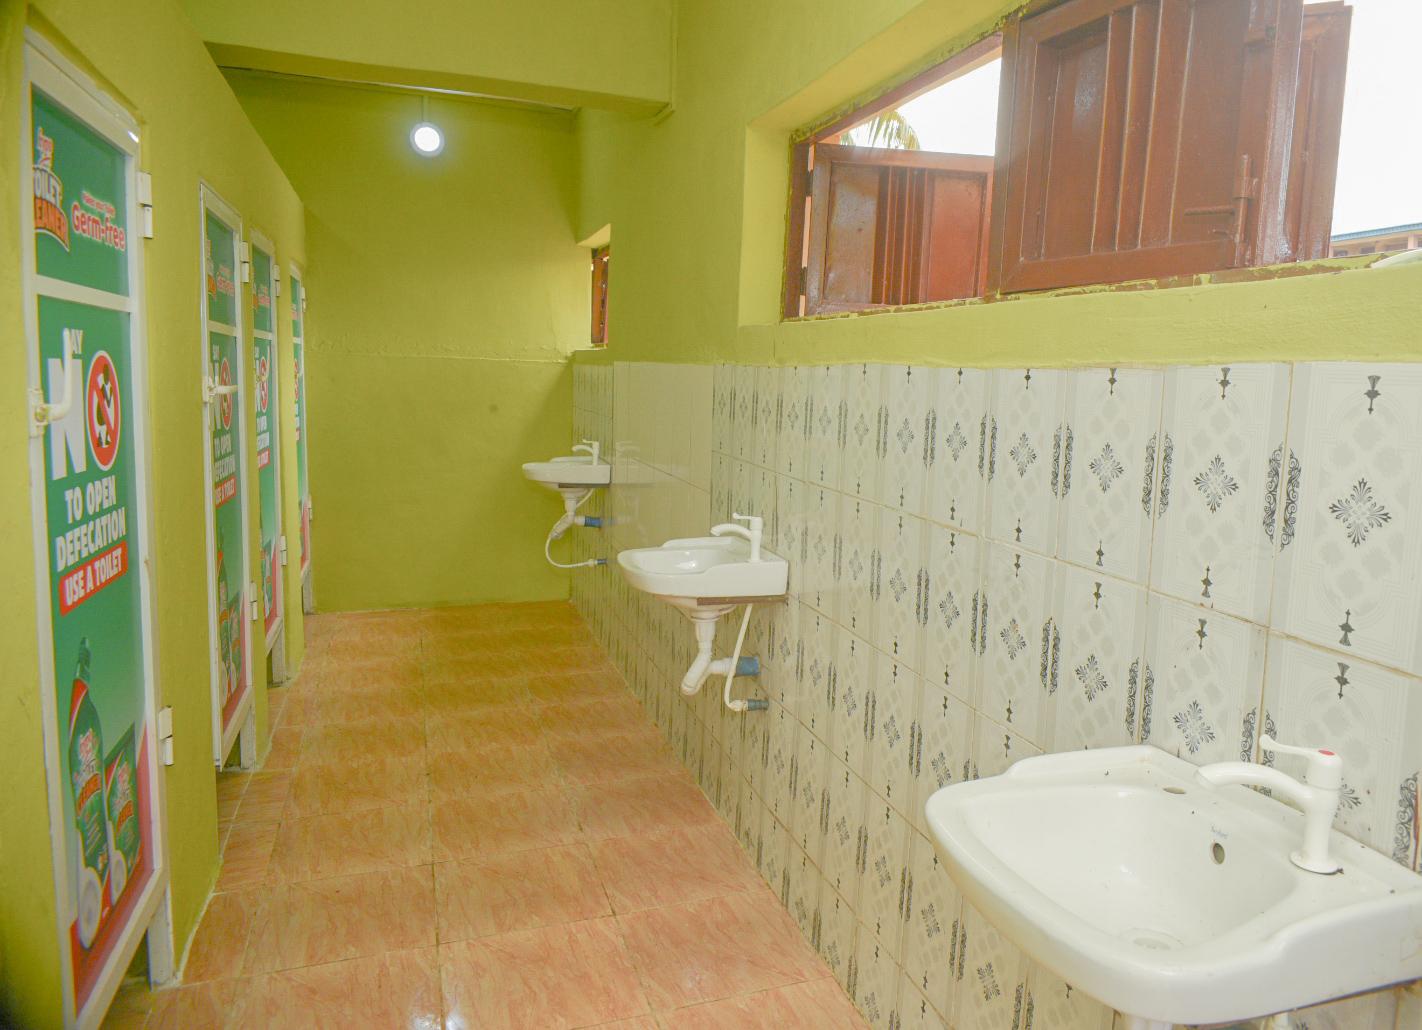 Hypo Toilet Cleaner Takes Toilet Rescue Initiative To More Schools